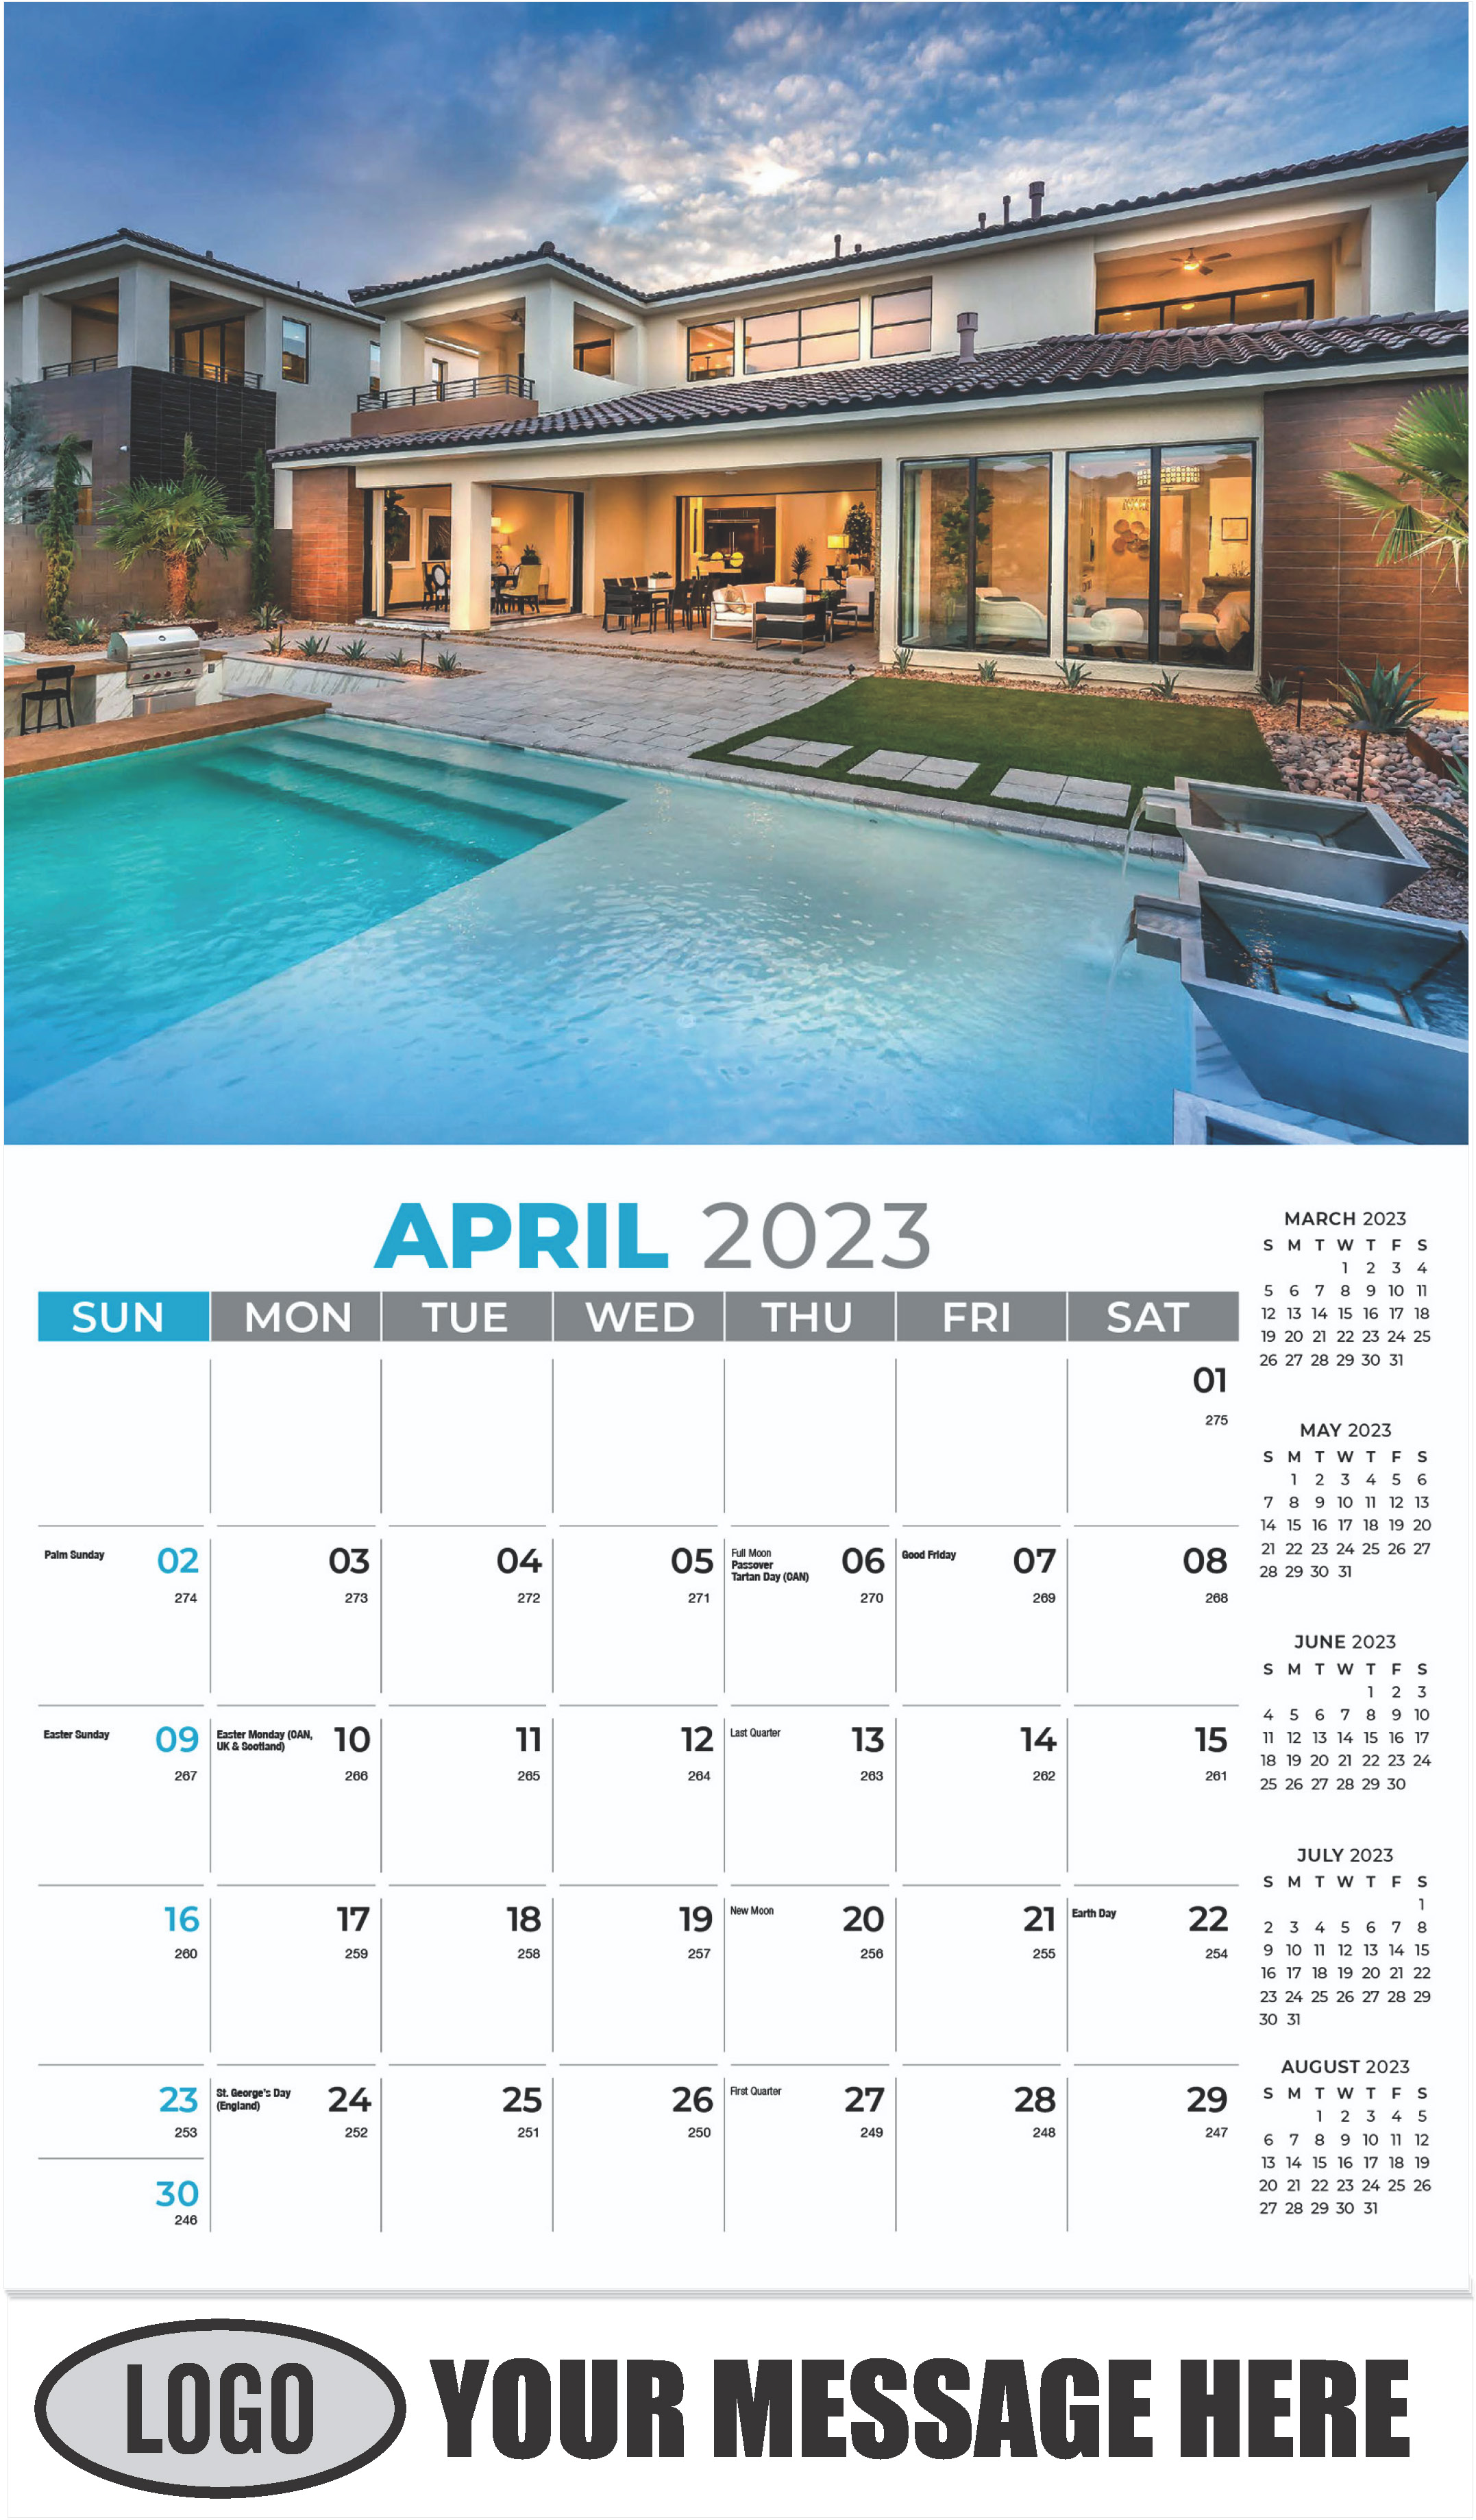 Luxury Homes Calendar - April - Homes 2023 Promotional Calendar